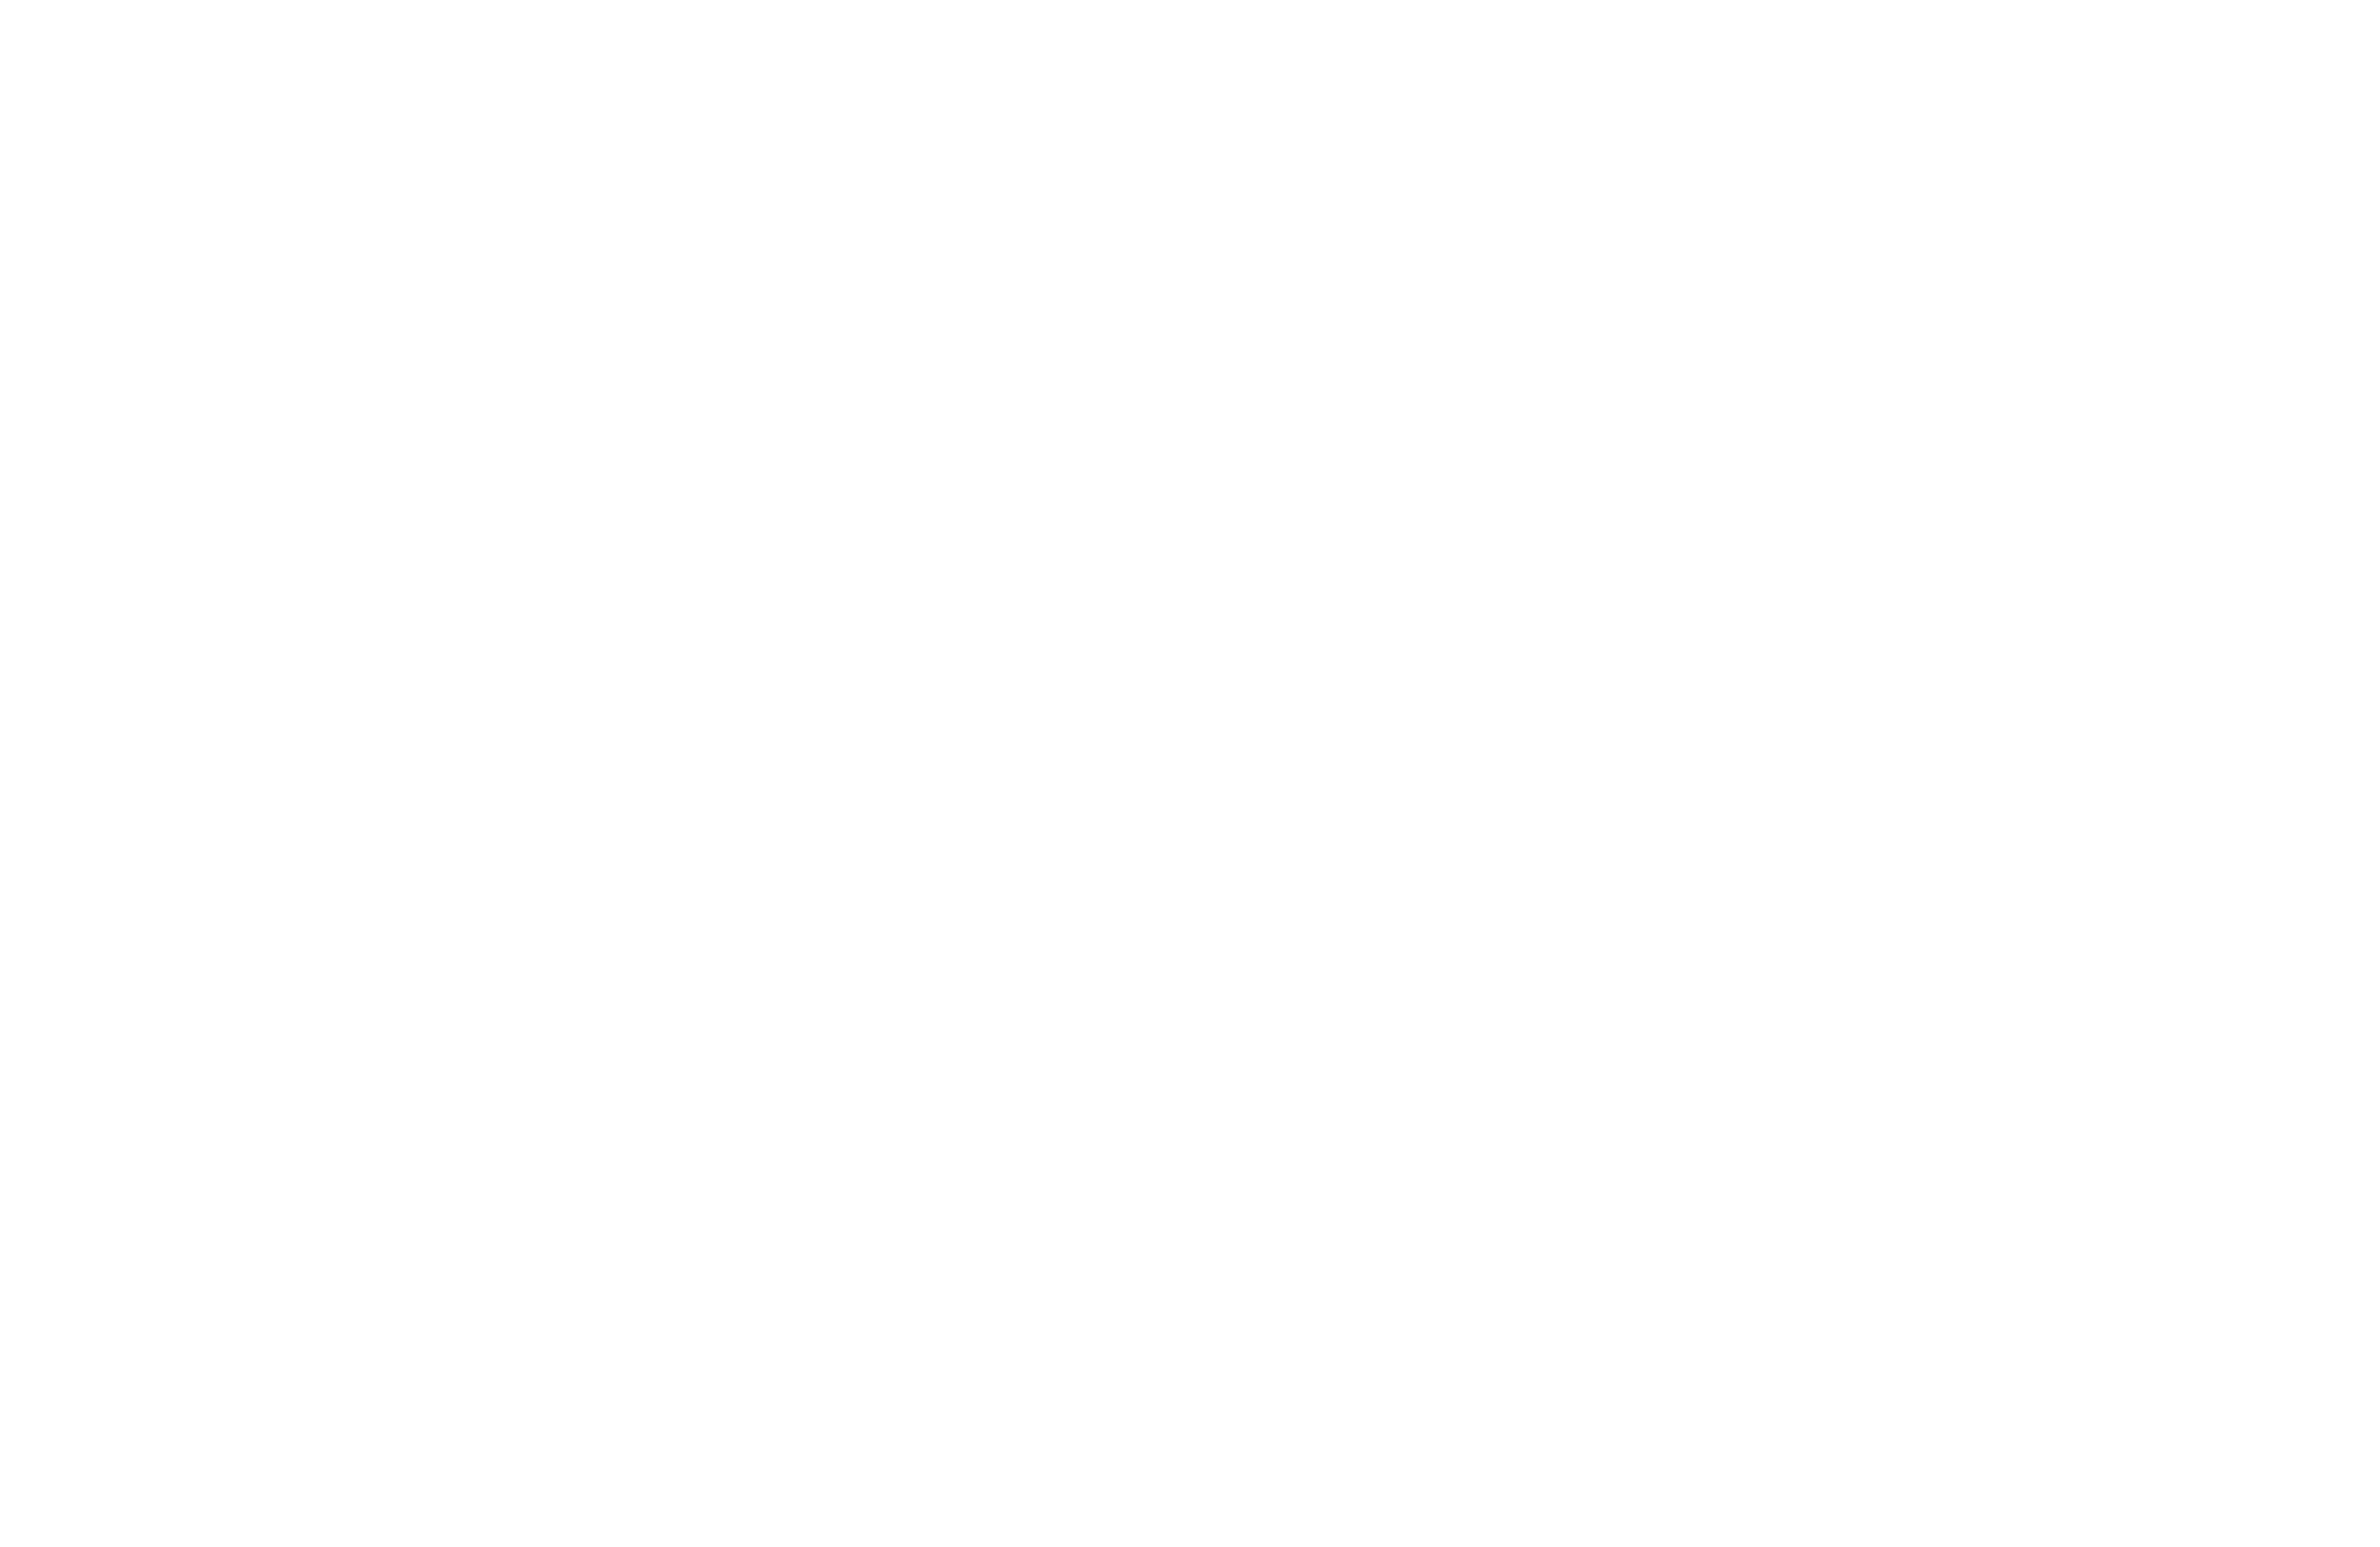 Moving Service Amsterdam Logo